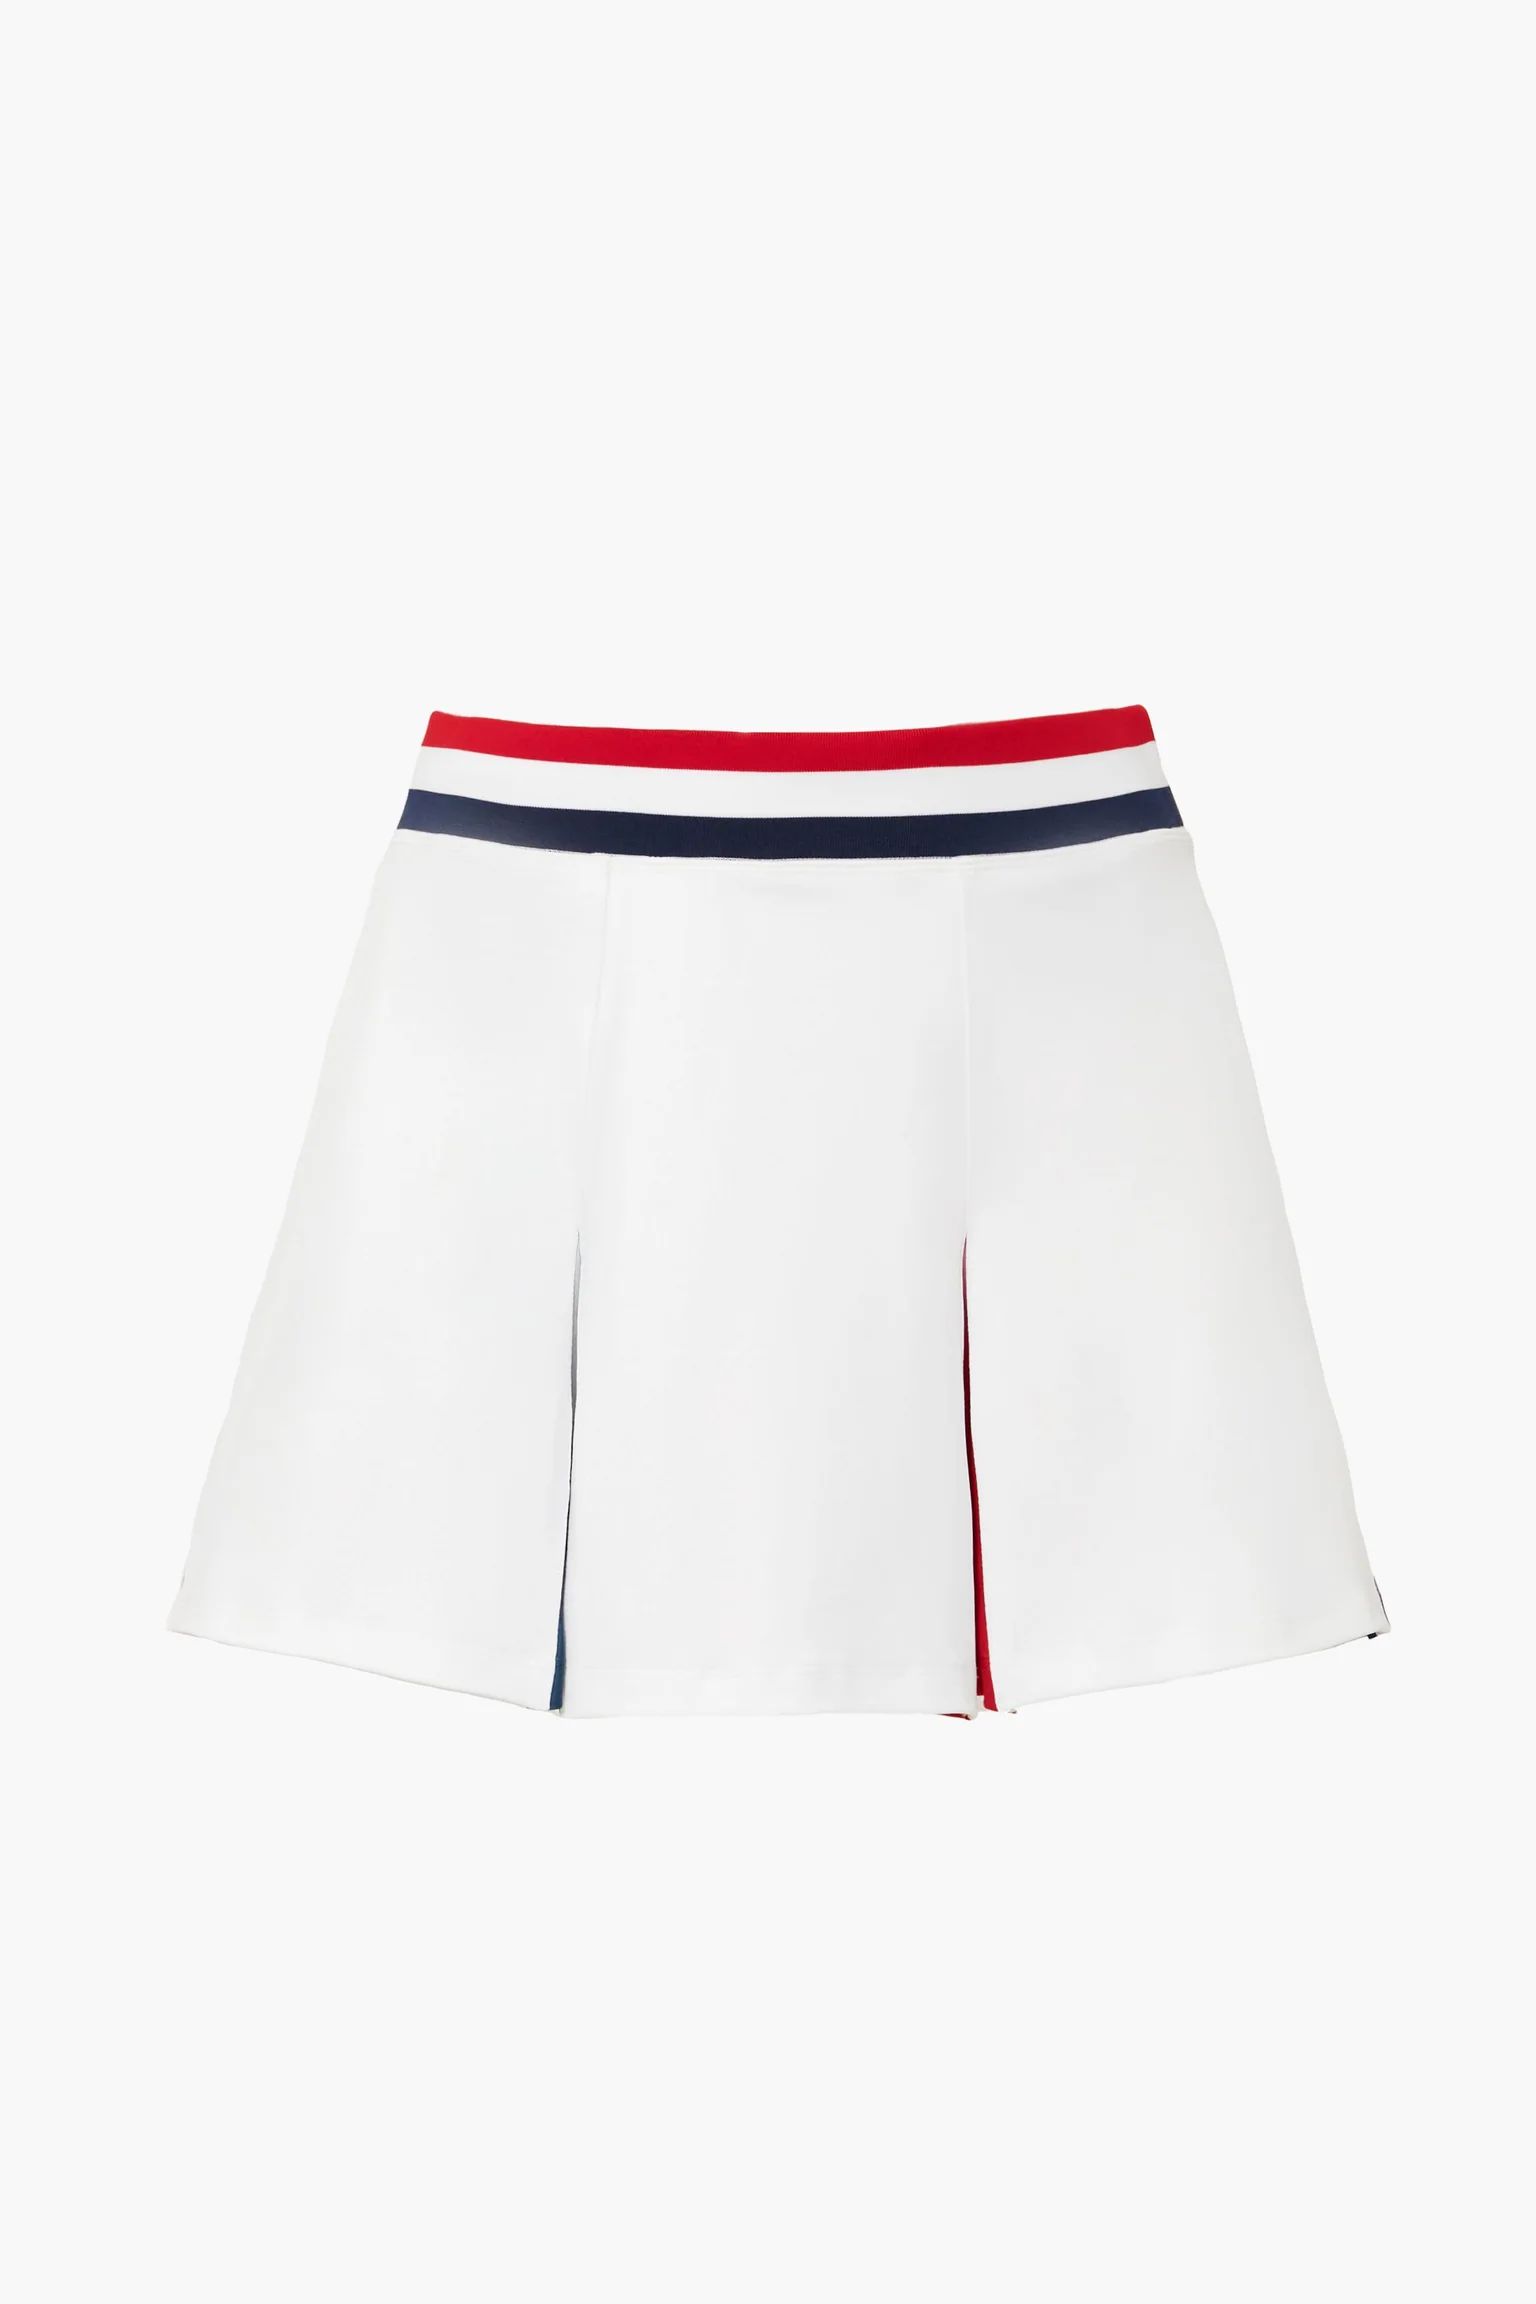 Americana 14 Inch Carly Tennis Skirt | Tuckernuck (US)